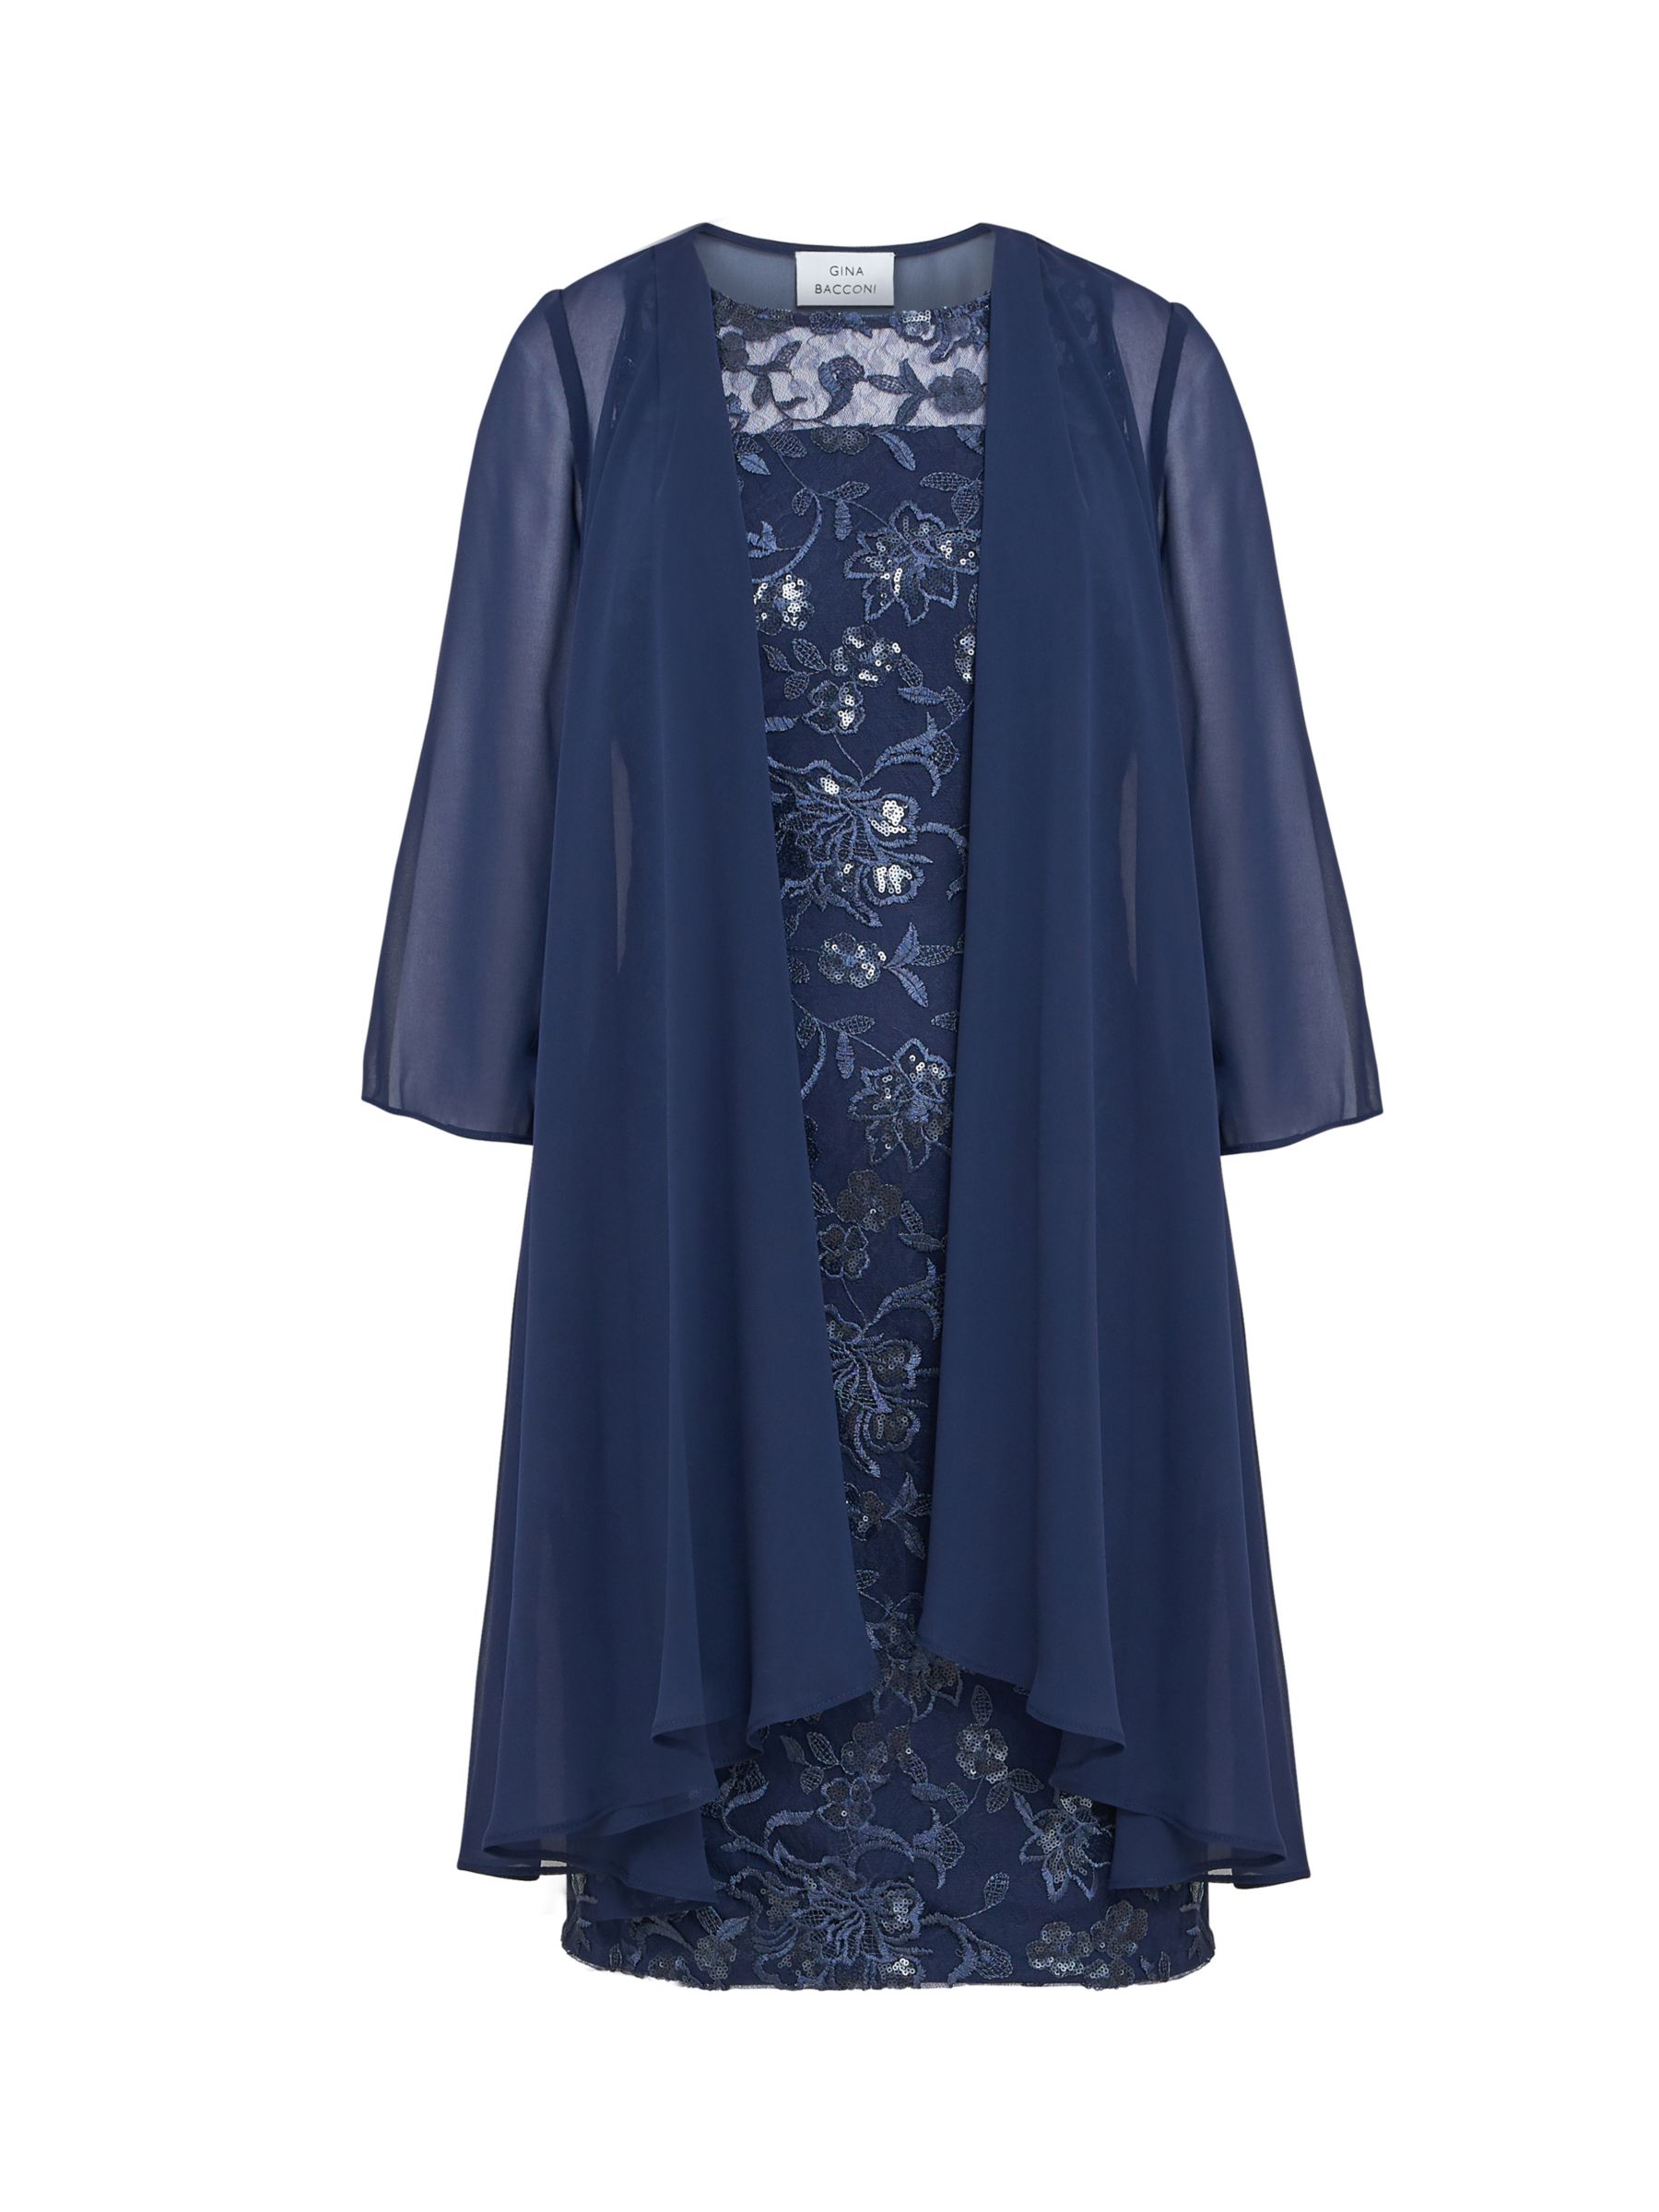 Gina Bacconi Petite Marla Embroidered Dress, Navy, 12